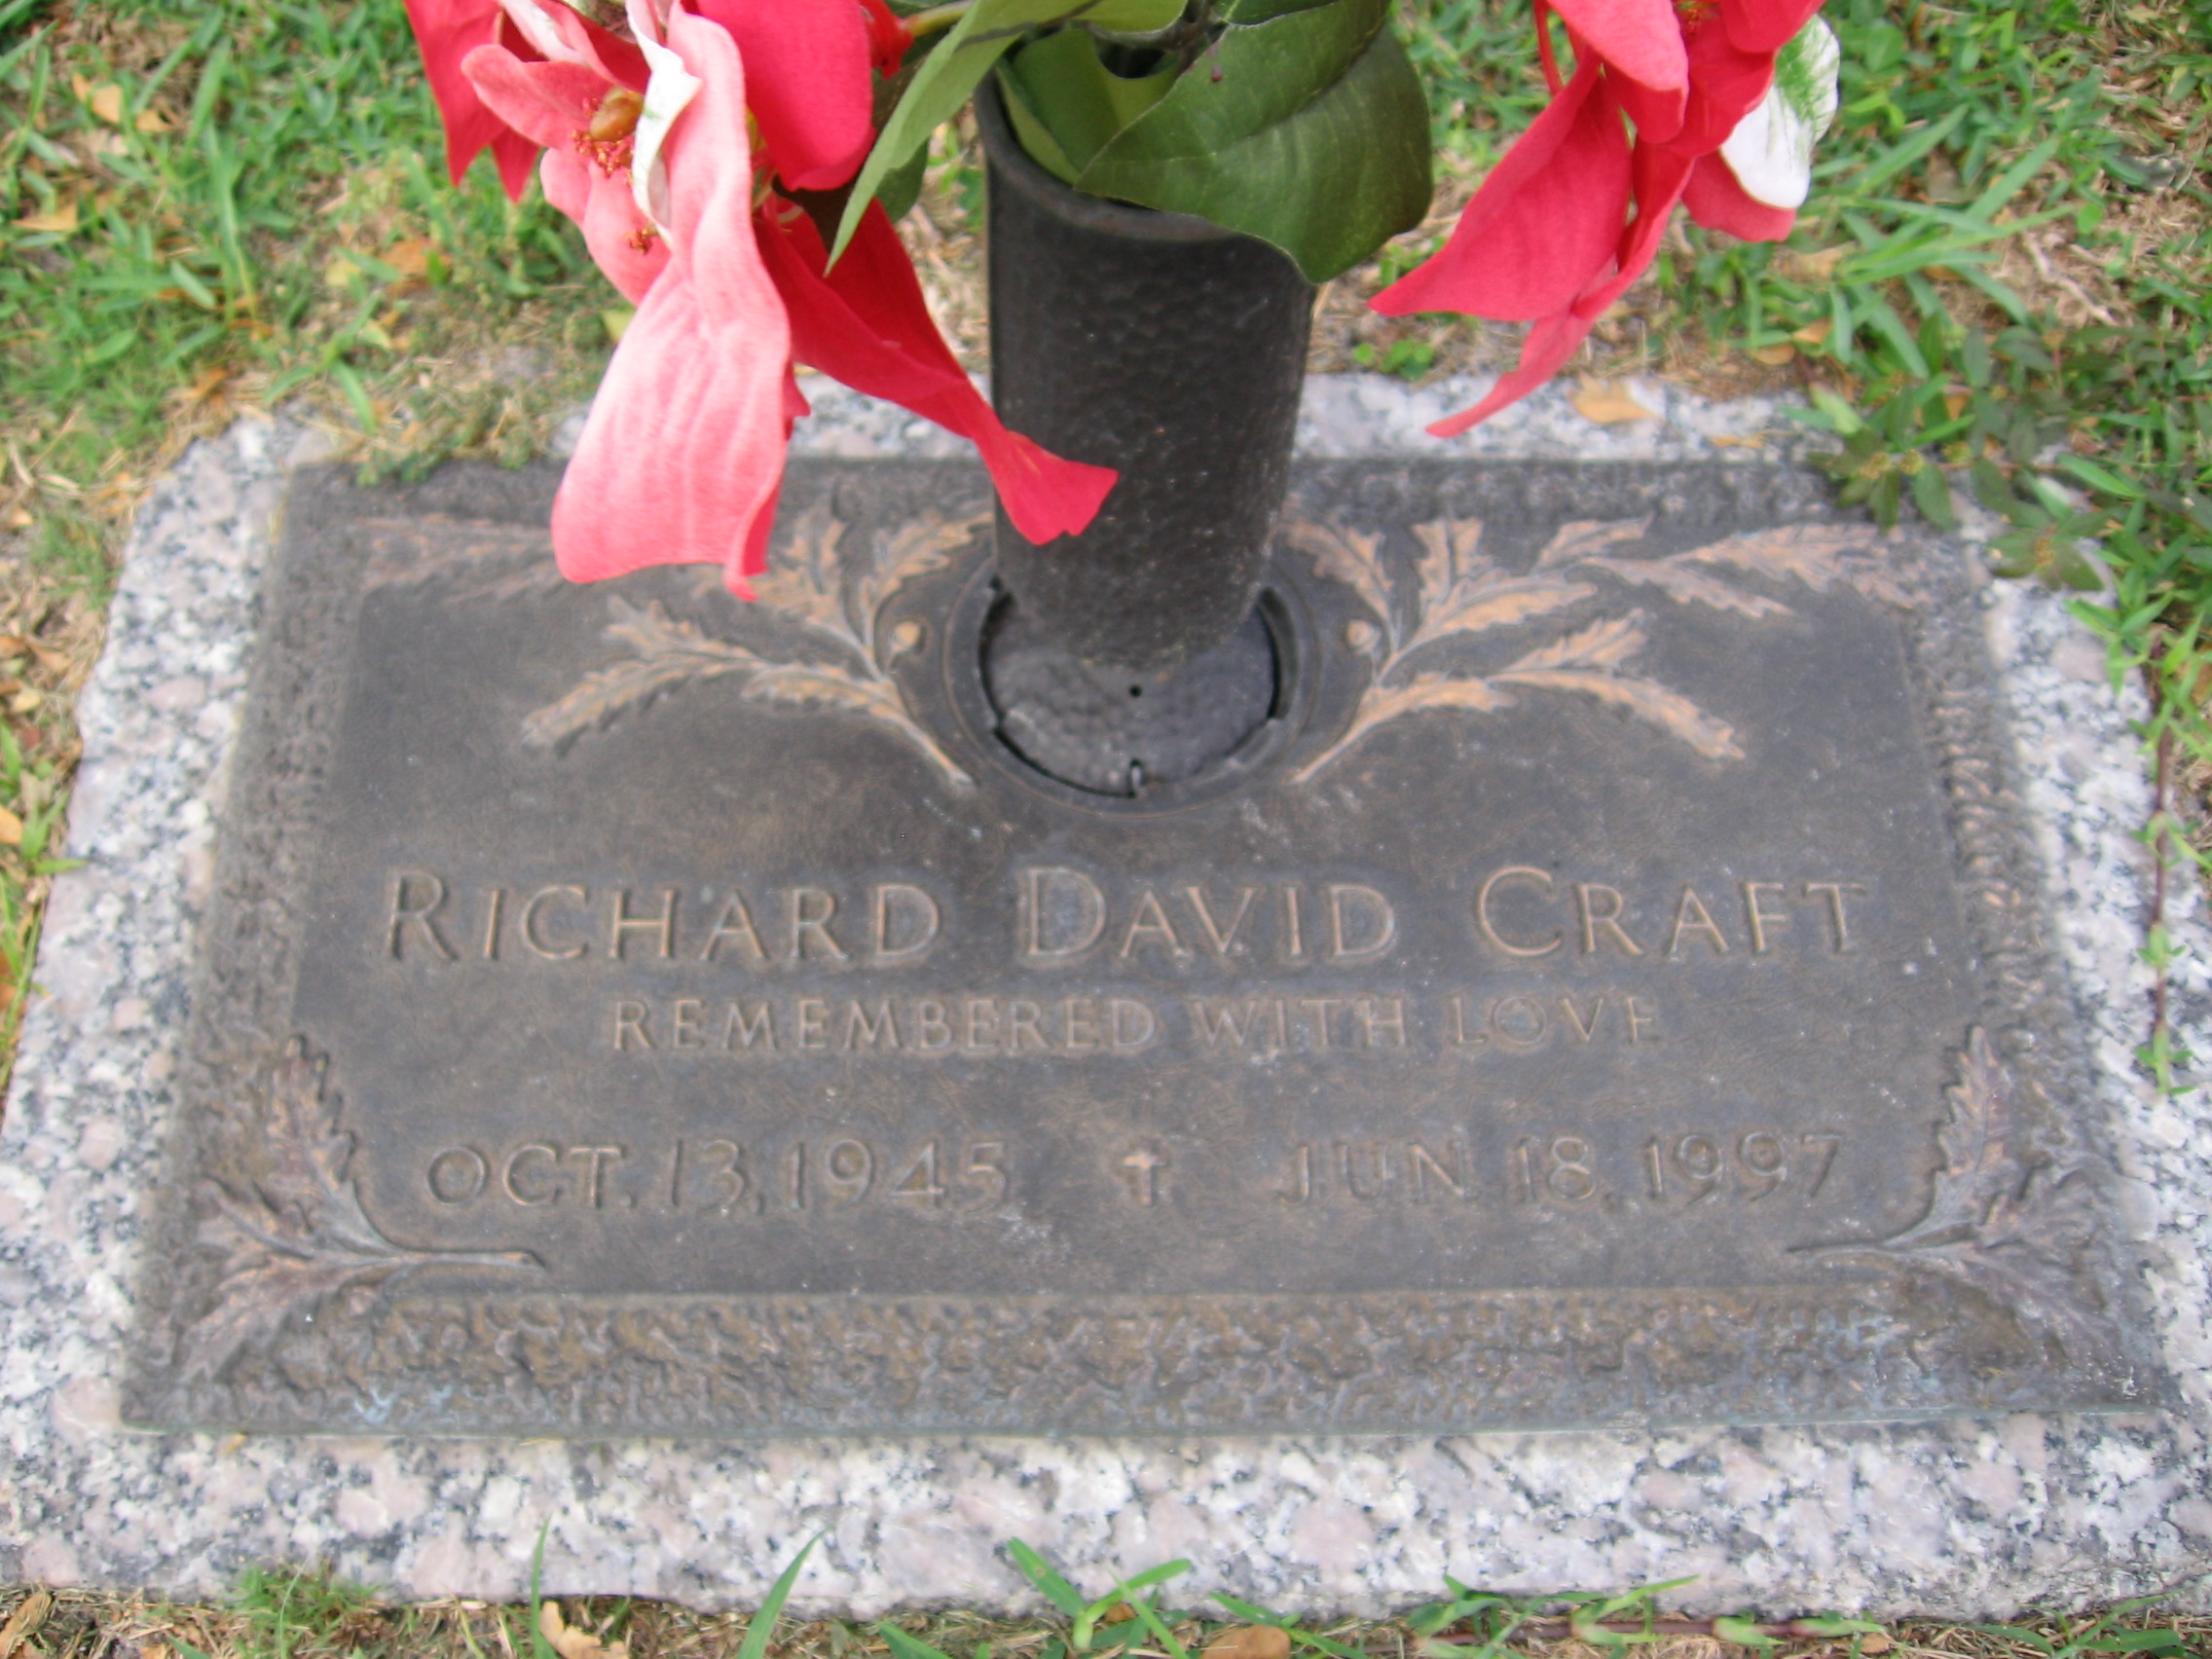 Richard David Craft